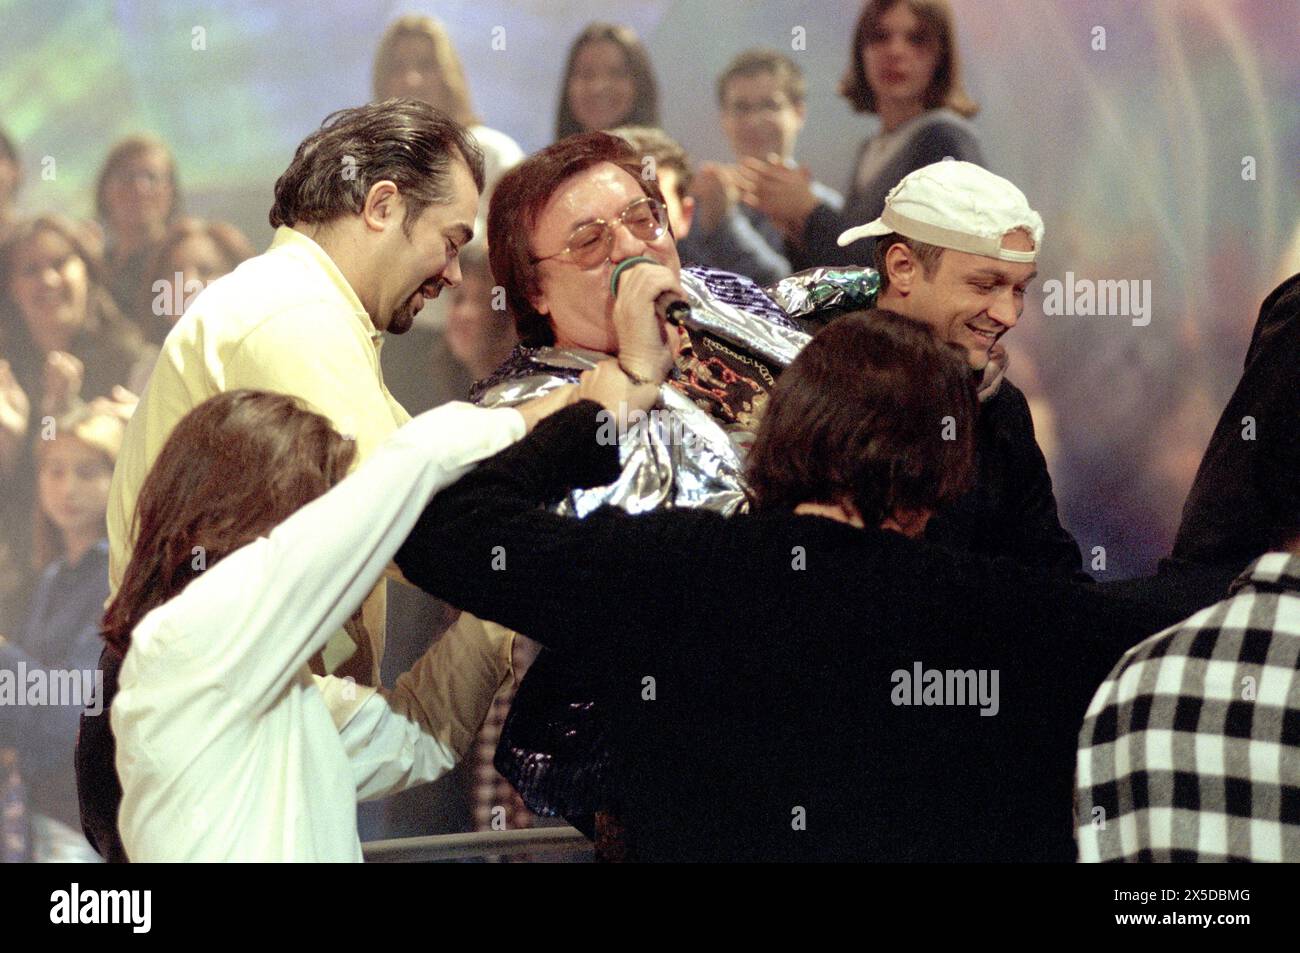 Milan Italy 15/05/1998 : Leone Di Lernia,Italian singer, during the television show “Super 1998” Stock Photo